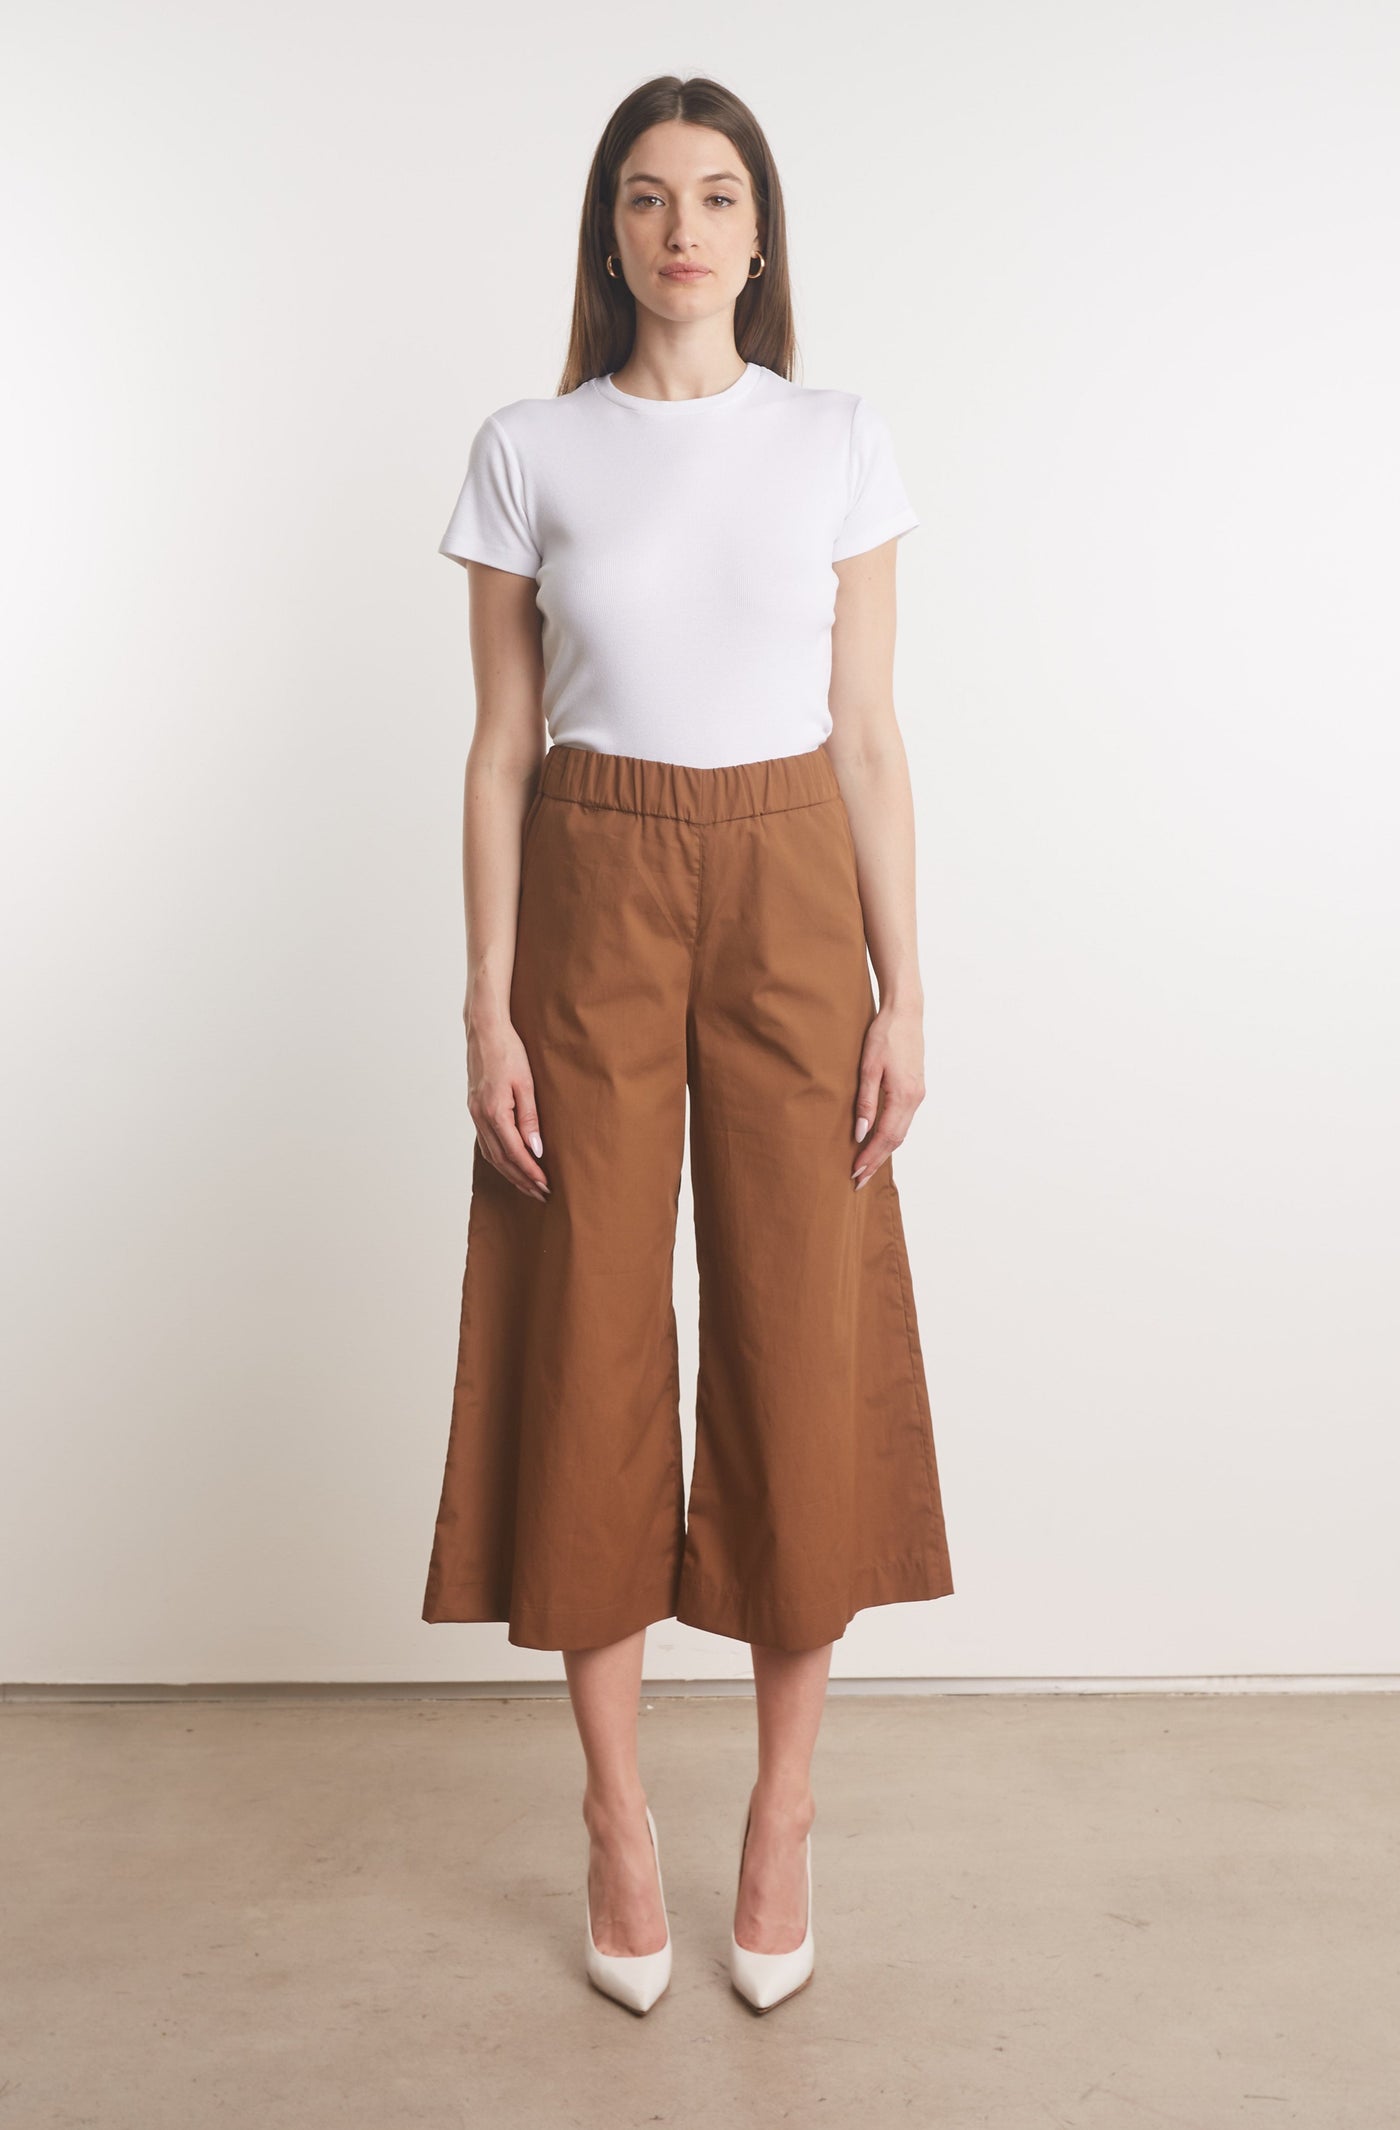 Womens Casual Cotton Culottes Palazzo Trousers Elastic Waist Wide Leg Pants  Work | eBay